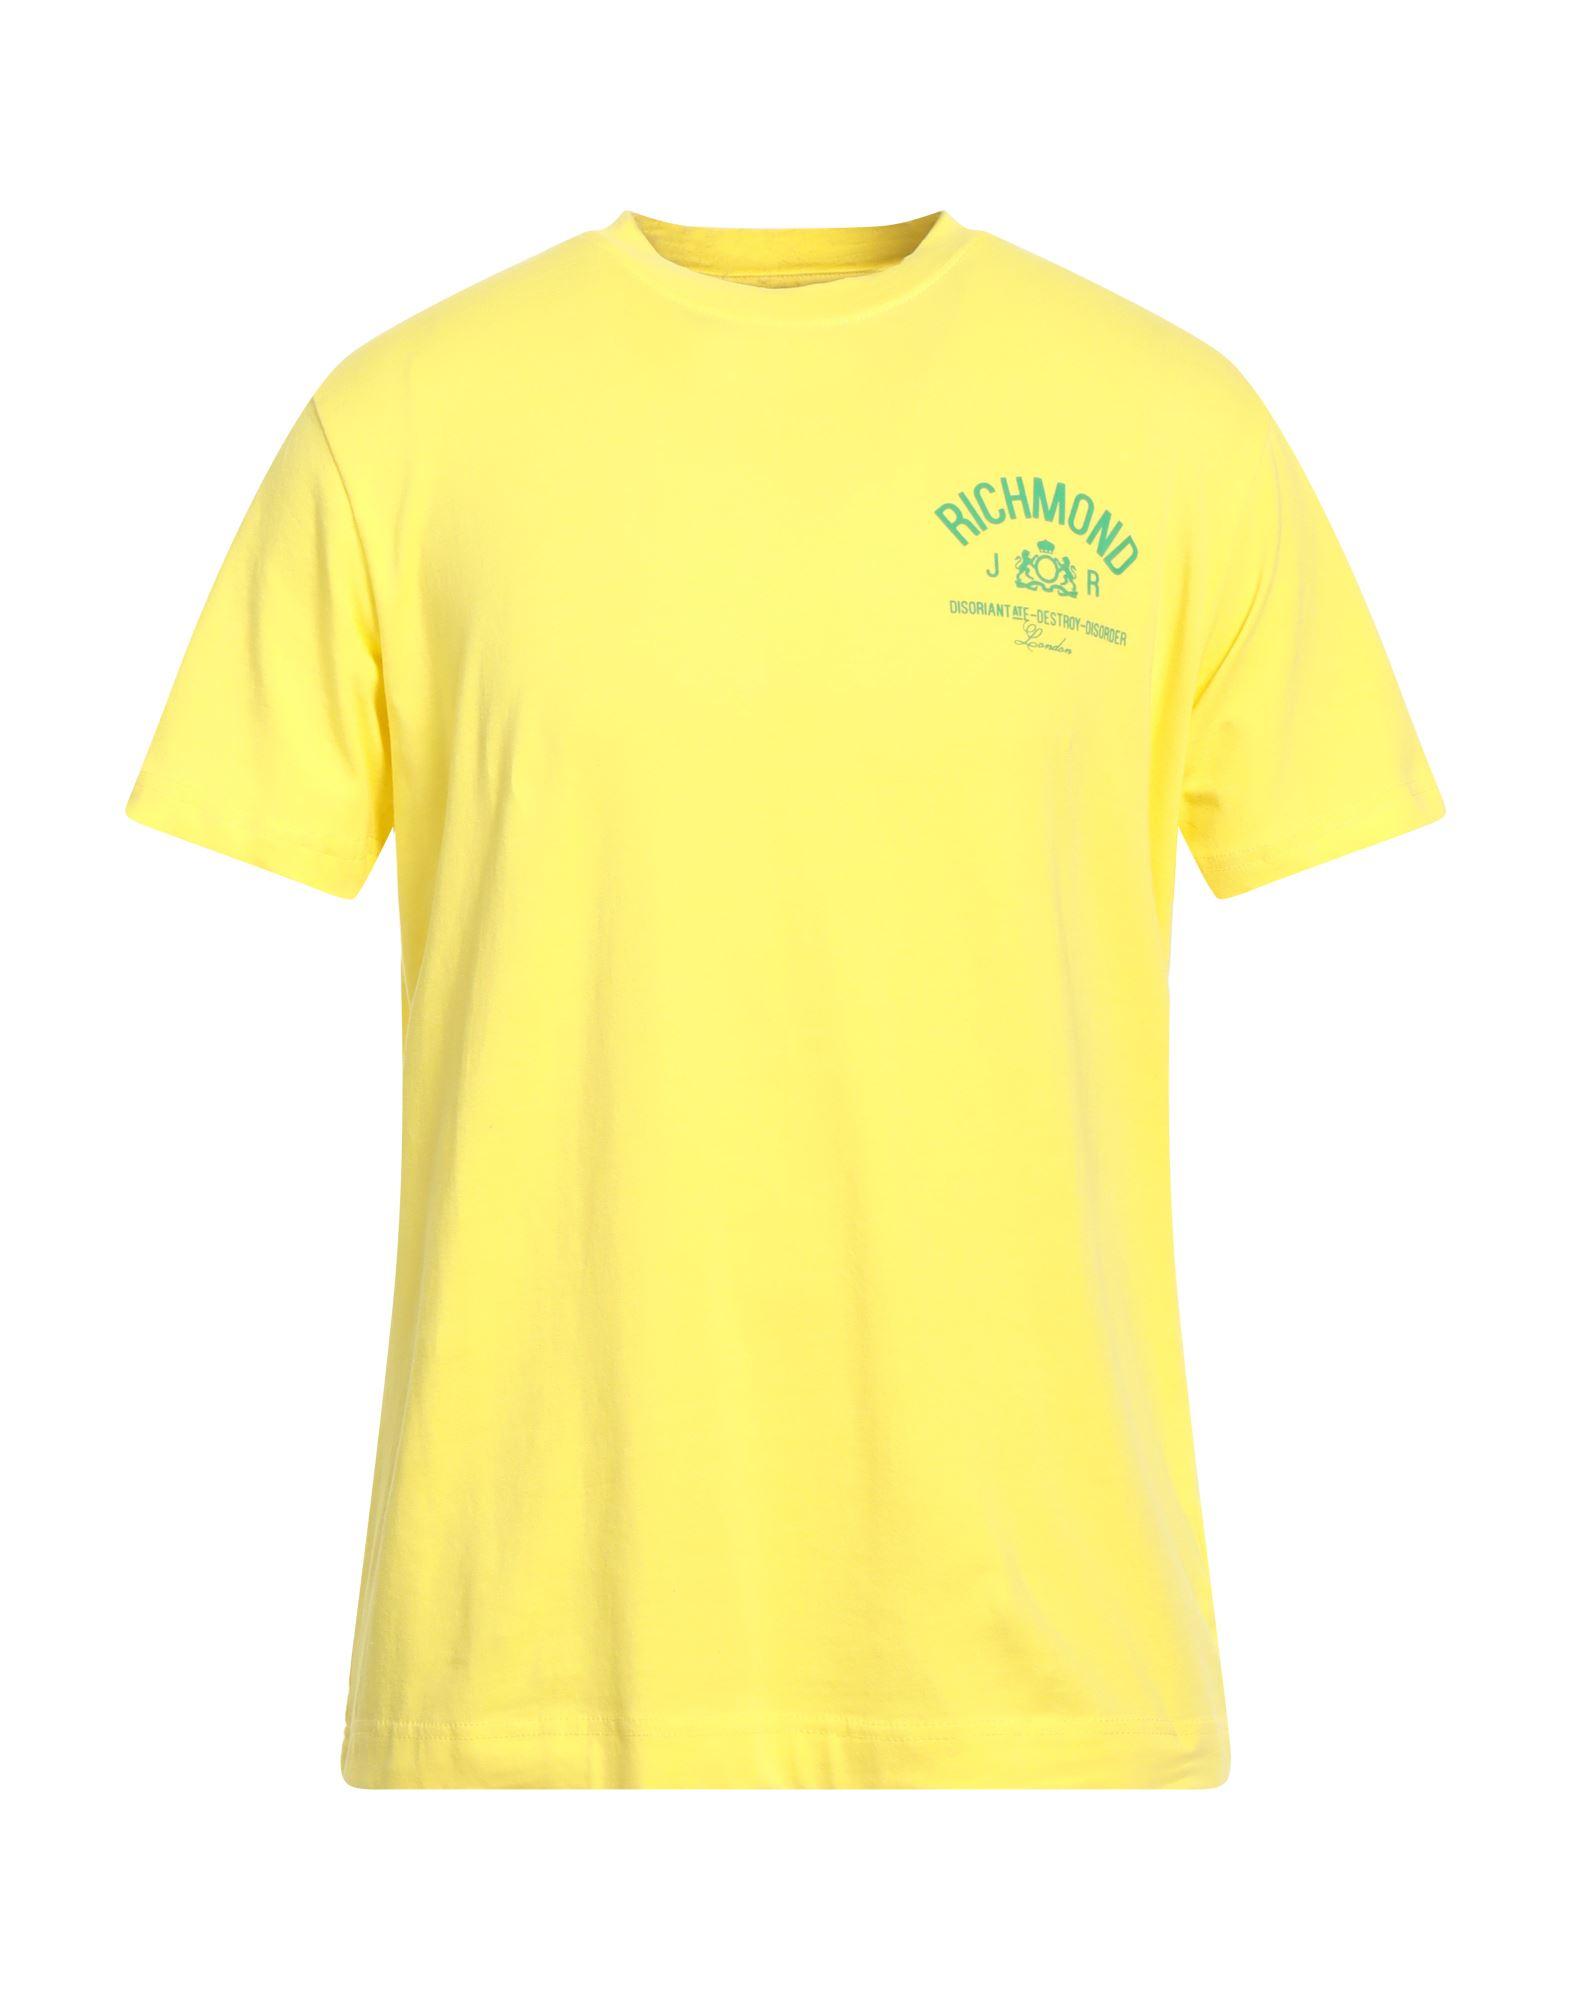 John Richmond T-shirt in Yellow for Men | Lyst